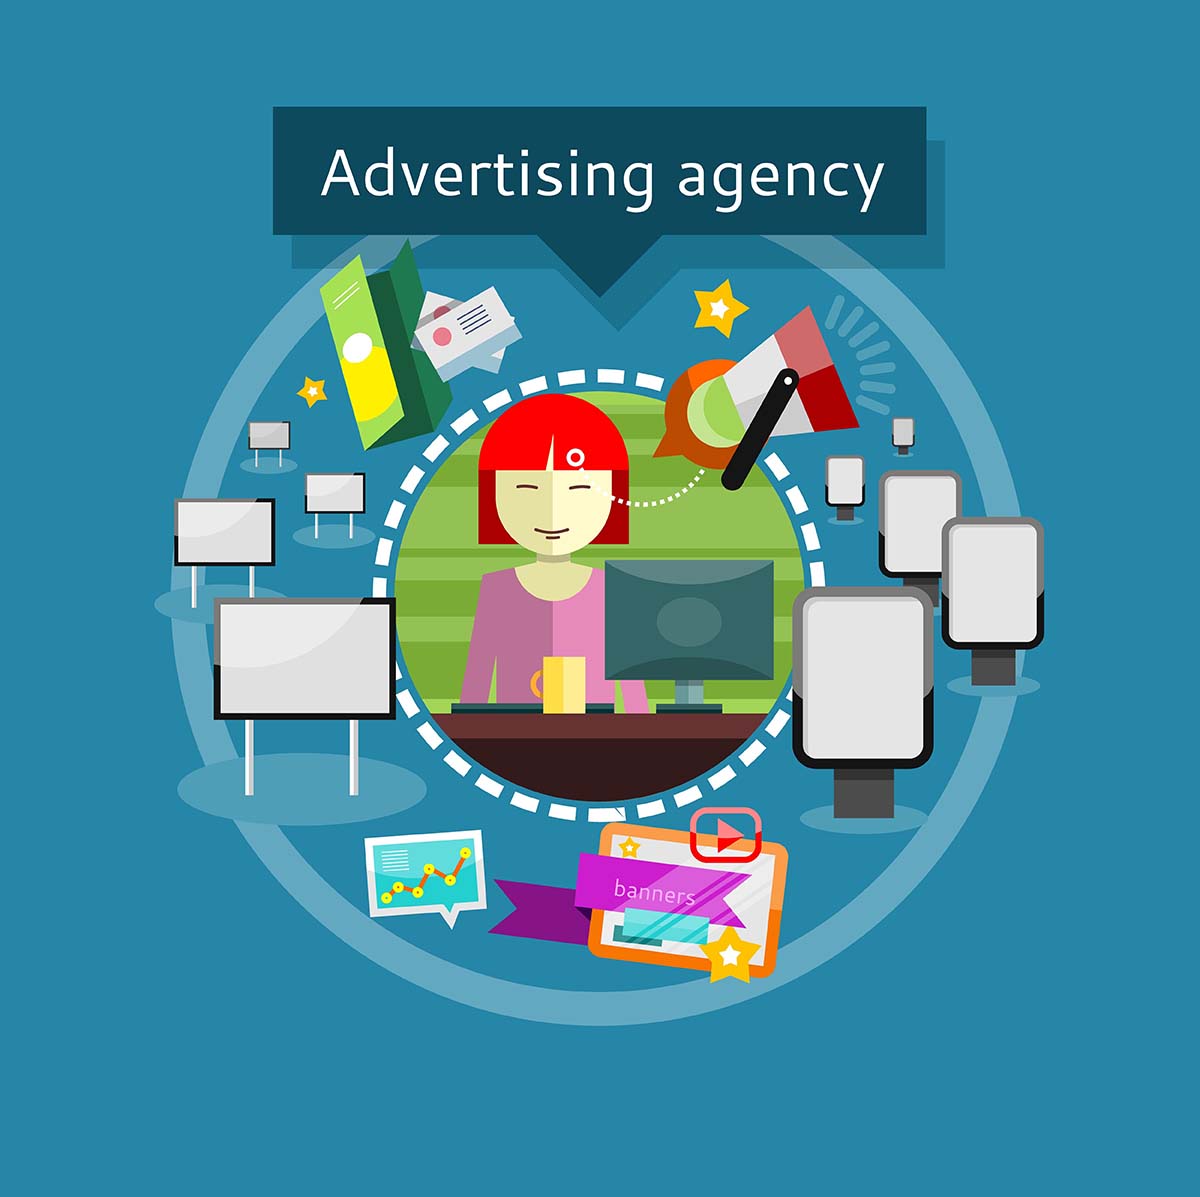 AdvertisingAgency.jpg